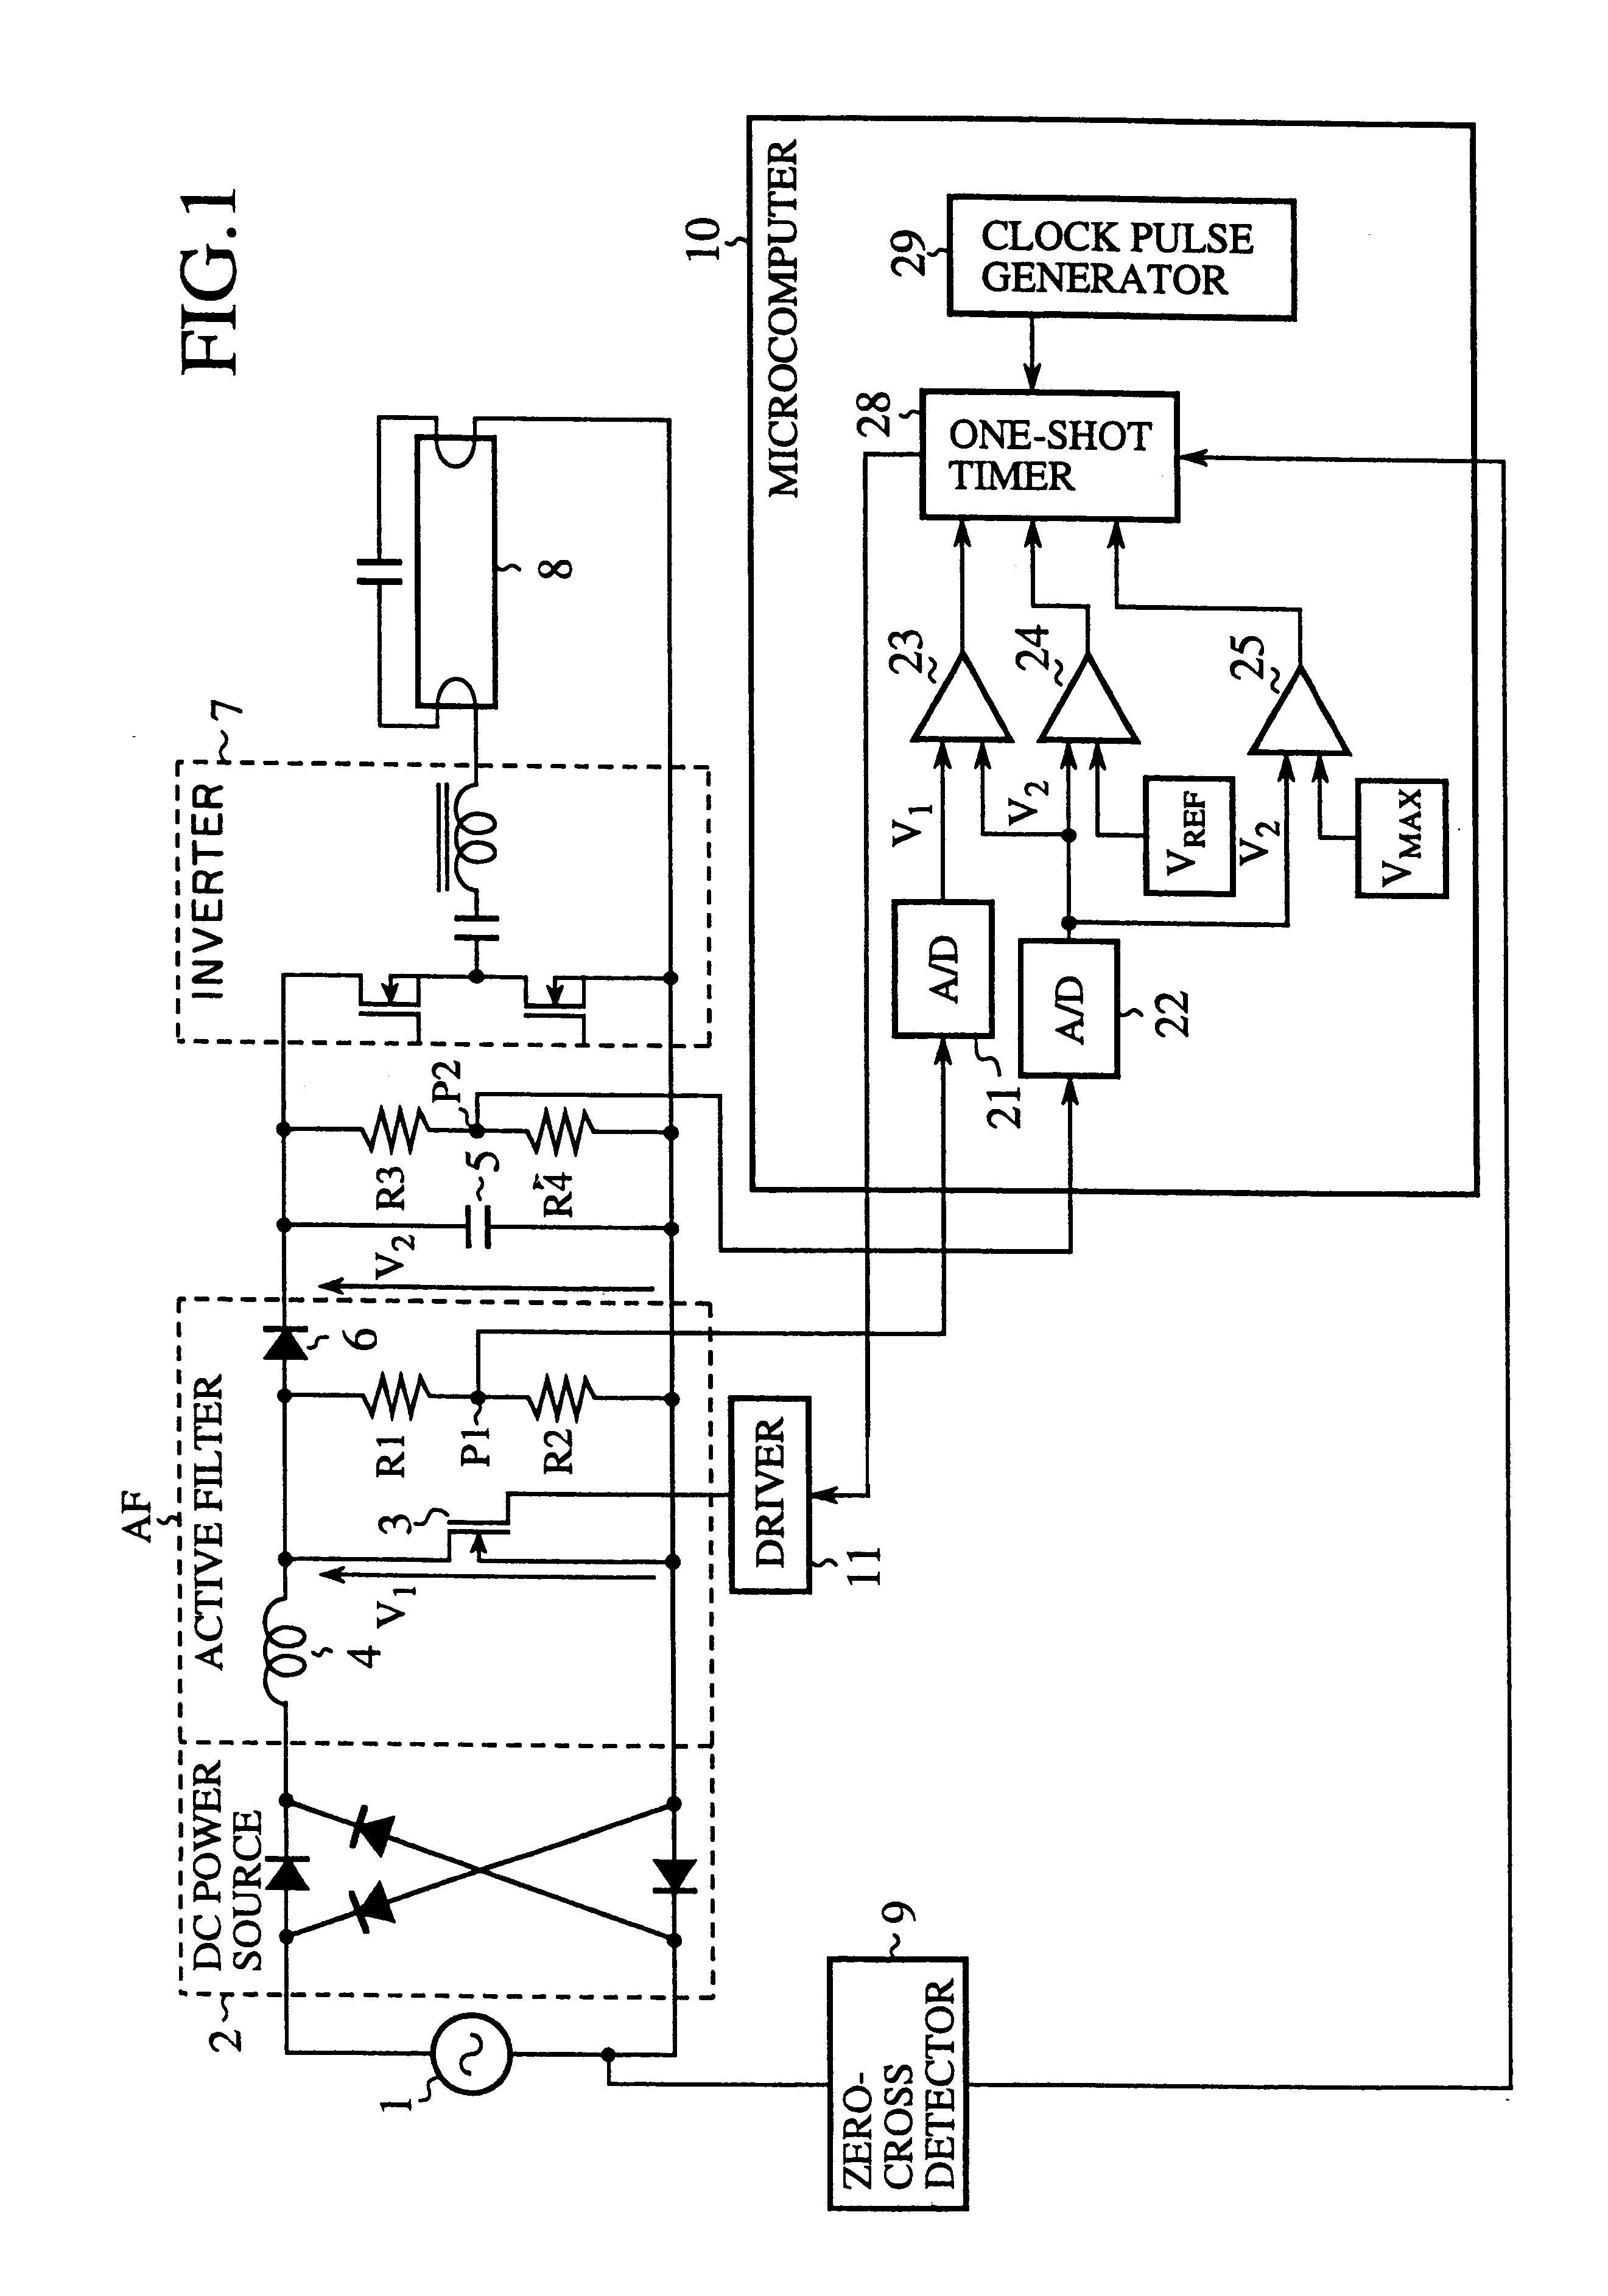 Power regulator using active filter